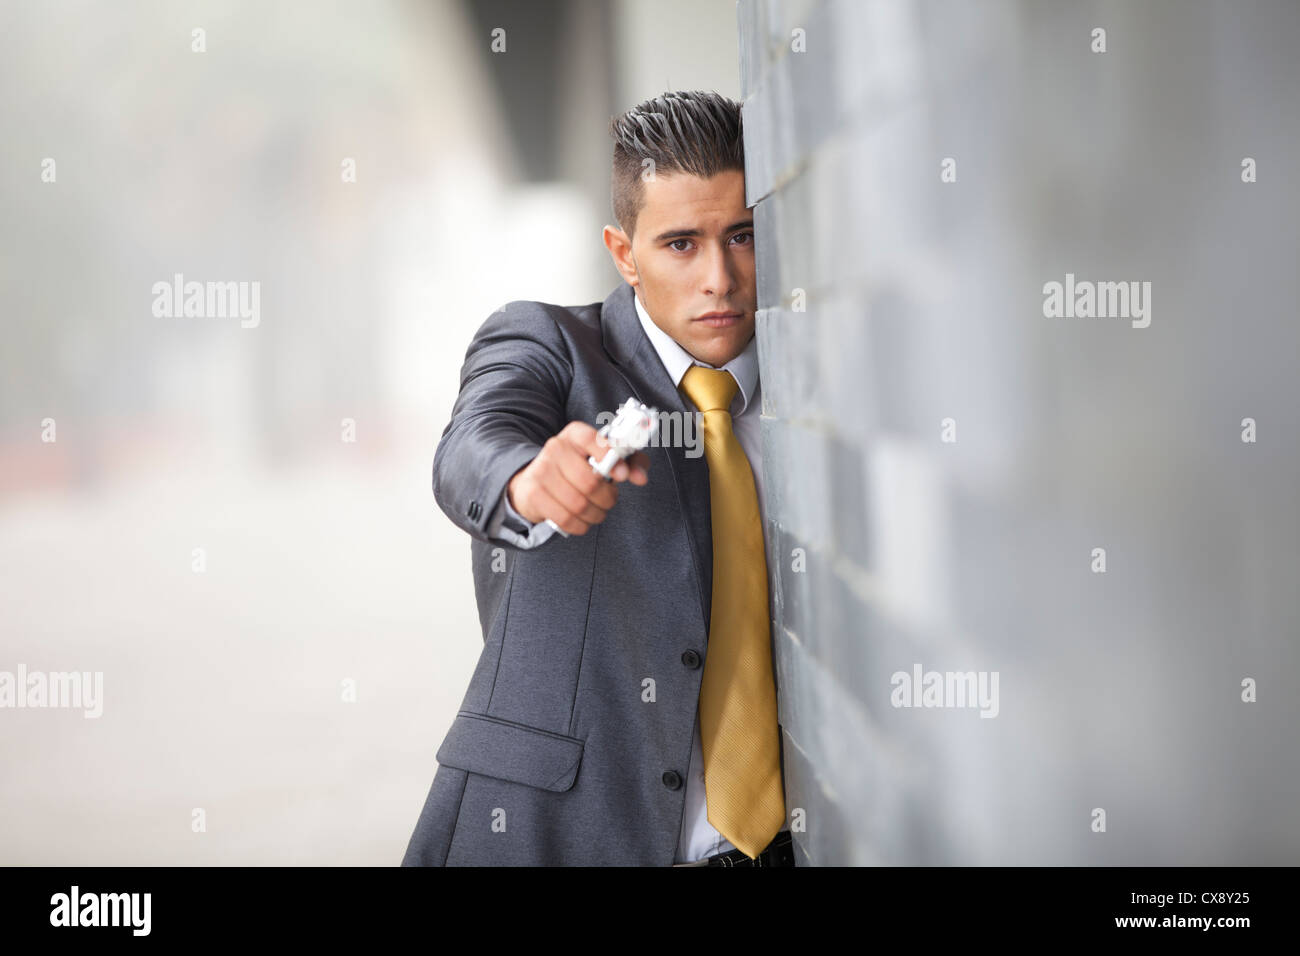 Powerful security businessman aiming a gun Stock Photo